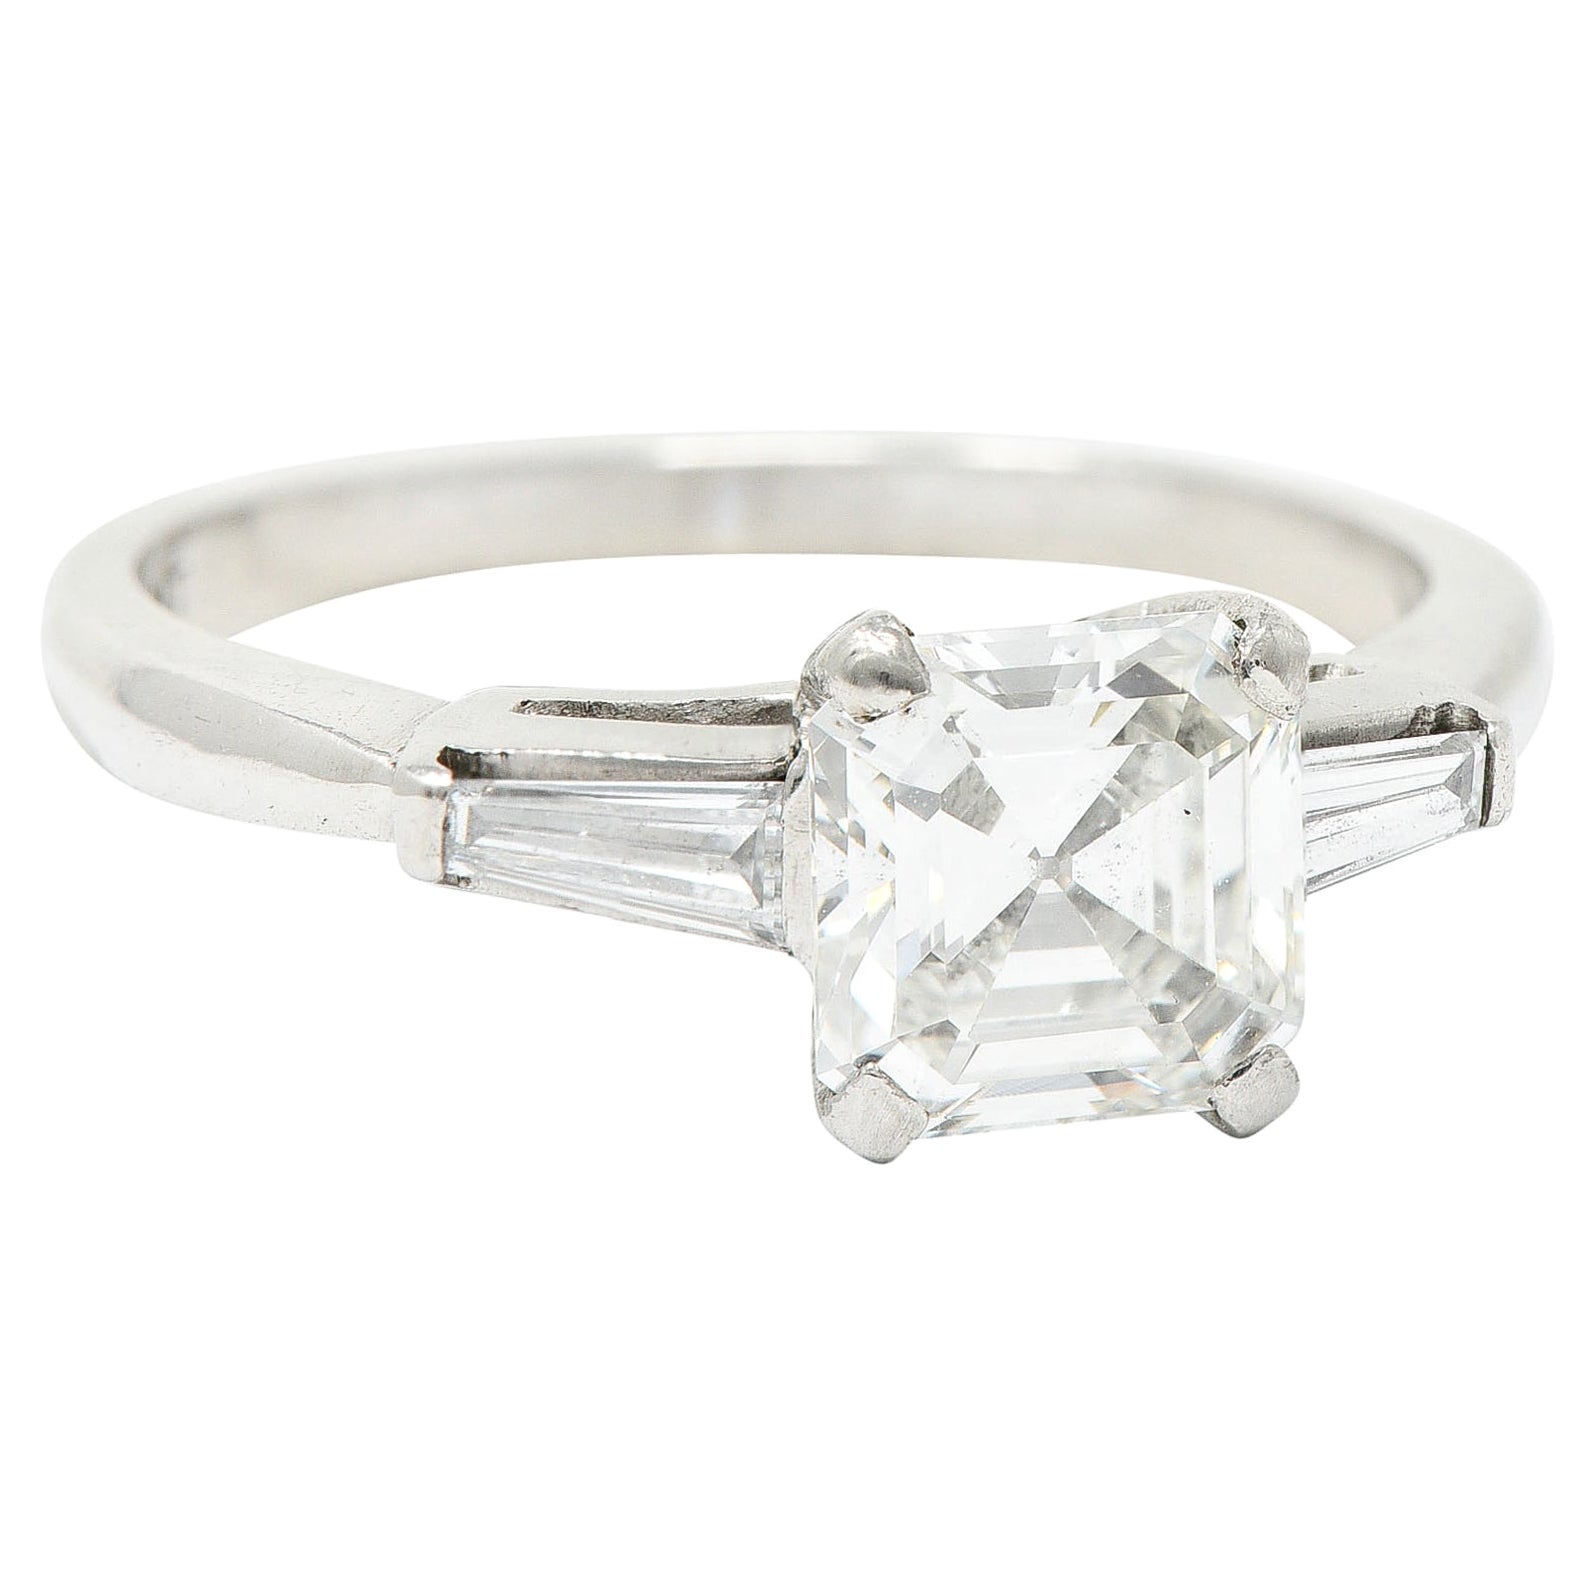 1950's Mid-Century 1.24 Carats Asscher Diamond Platinum Engagement Ring GIA